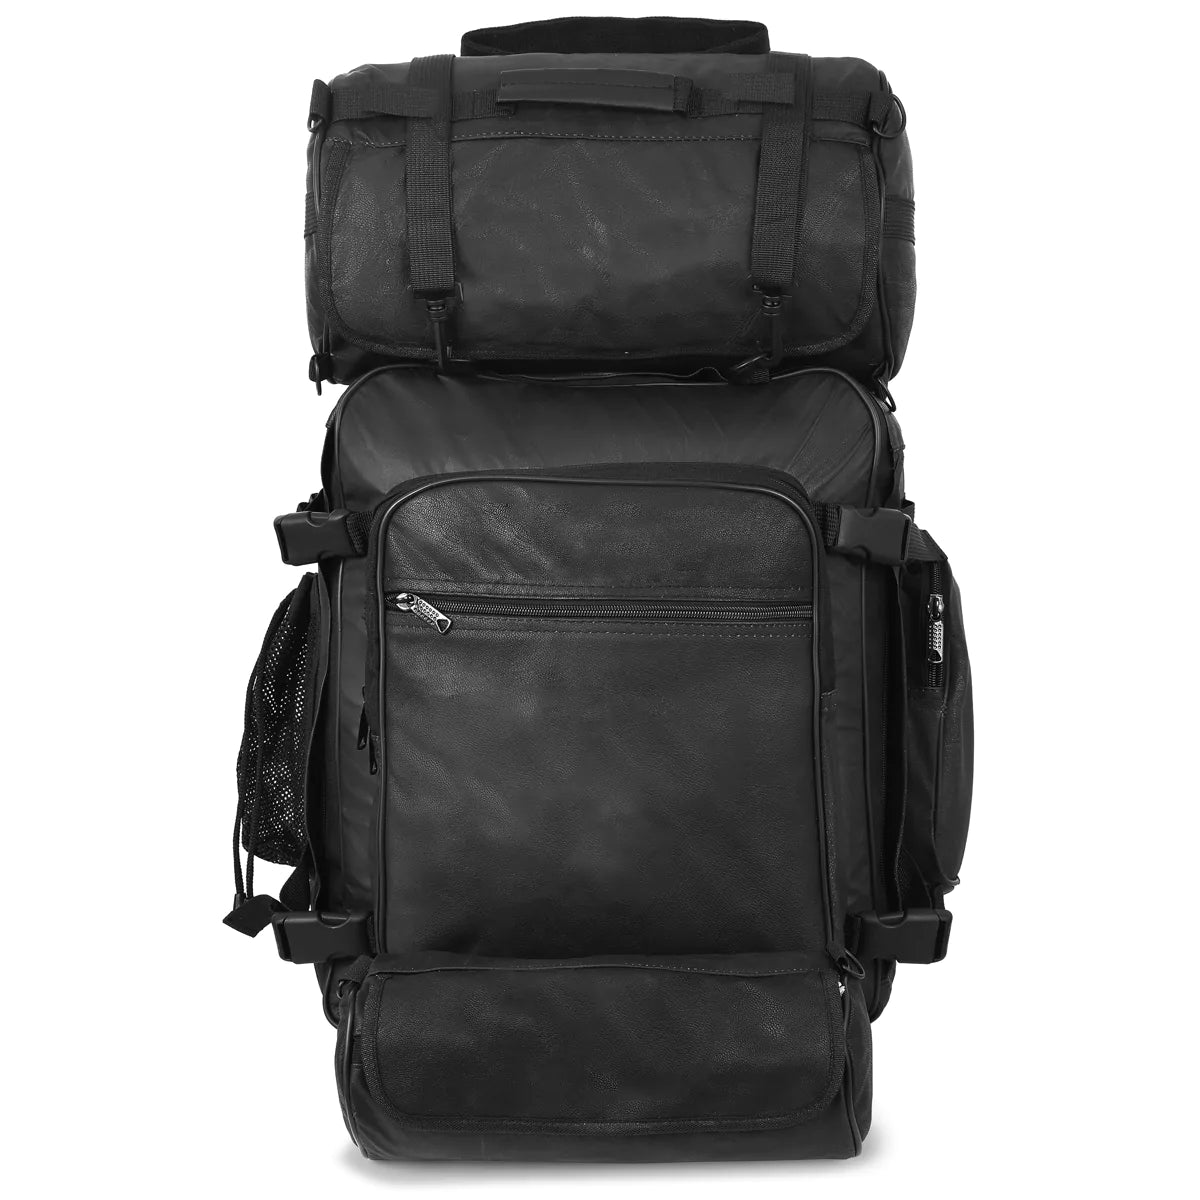 Vance Leather 3pc Rock Design Leather -Sissy Bar Bag Set